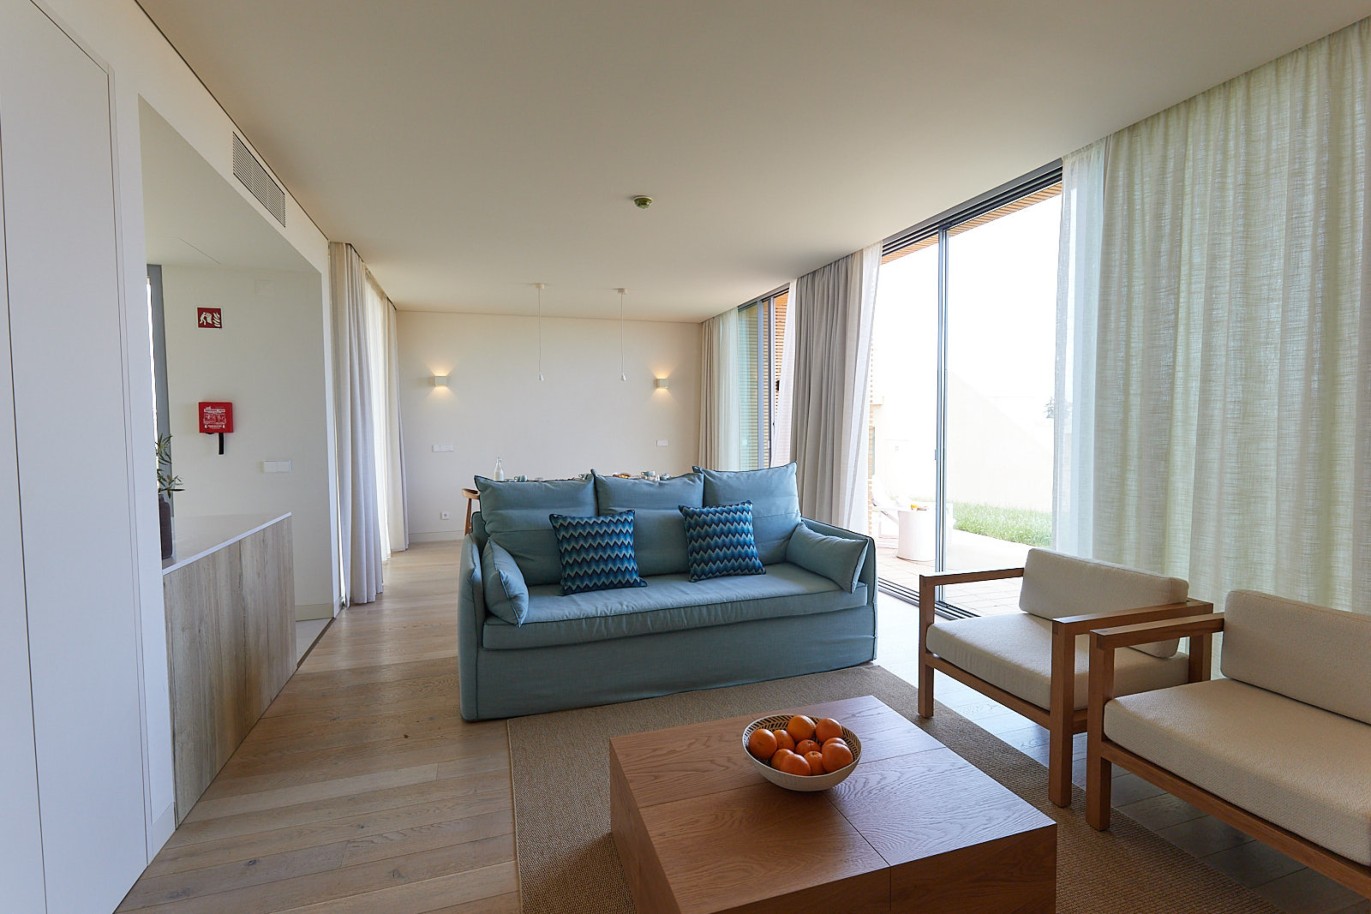 2 bedroom apartment in resort, for sale in Porches, Algarve_230501